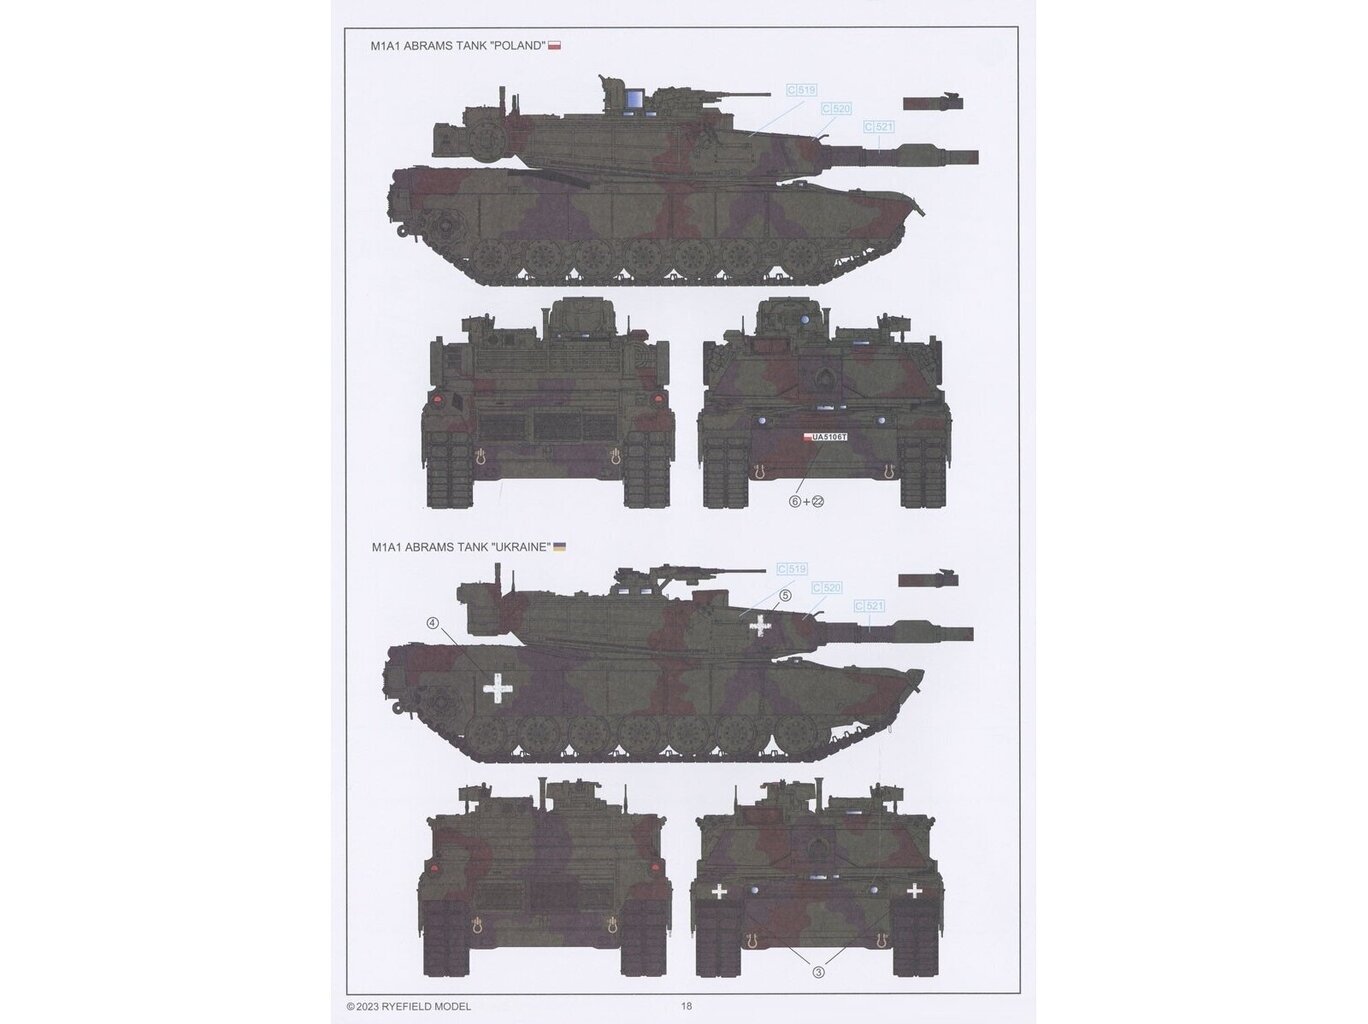 Līmējamais modelis Rye Field Model - M1A1 Abrams Ukraine/Poland 2in1 Limited Edition, 1/35, RFM-5106 цена и информация | Līmējamie modeļi | 220.lv